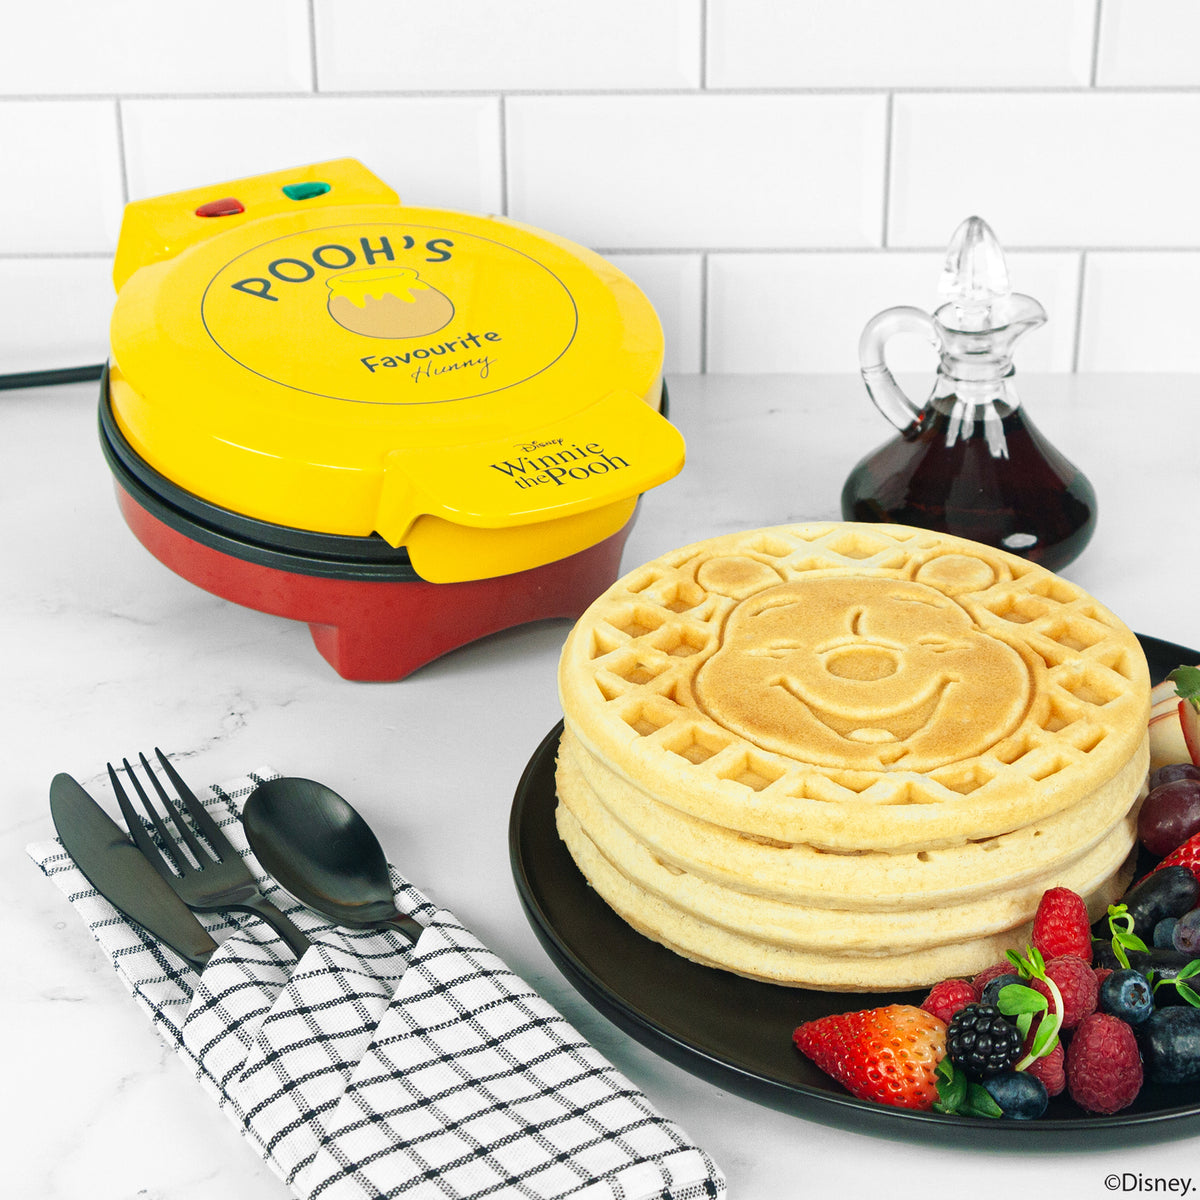 Disney Winnie the Pooh Waffle Maker